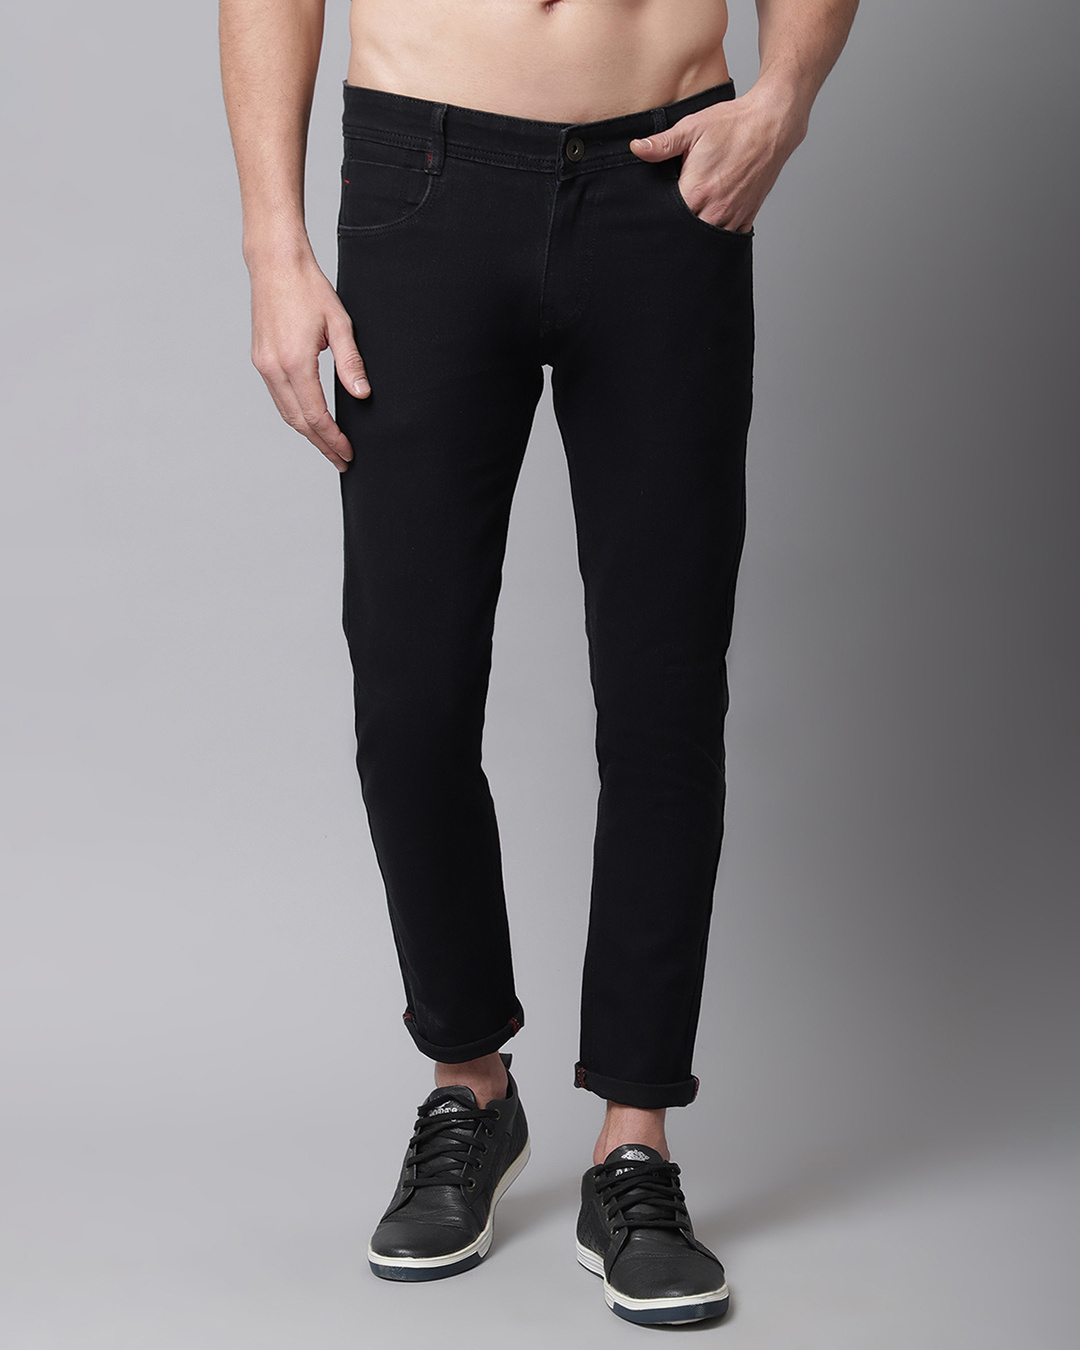 Buy Men's Black Slim Fit Jeans Online at Bewakoof